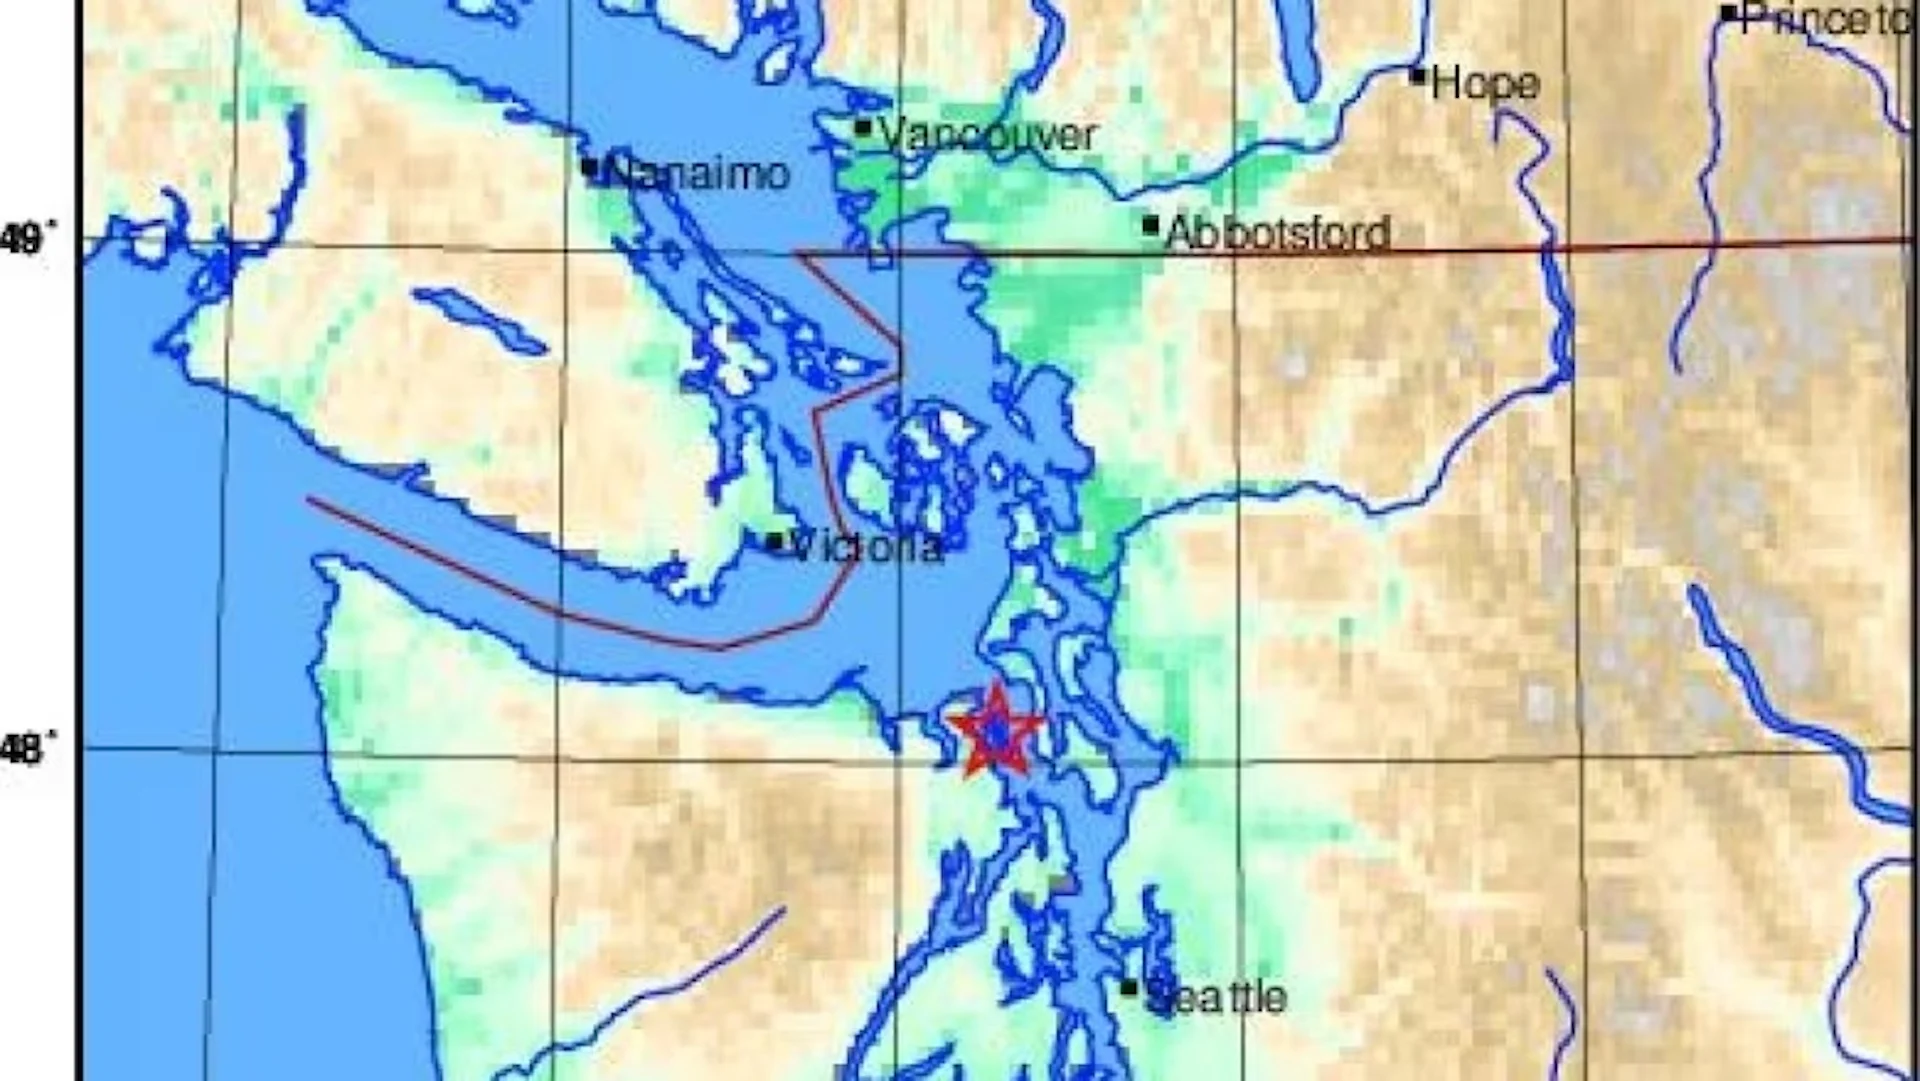 4.5-magnitude earthquake felt in Greater Victoria, B.C., area 